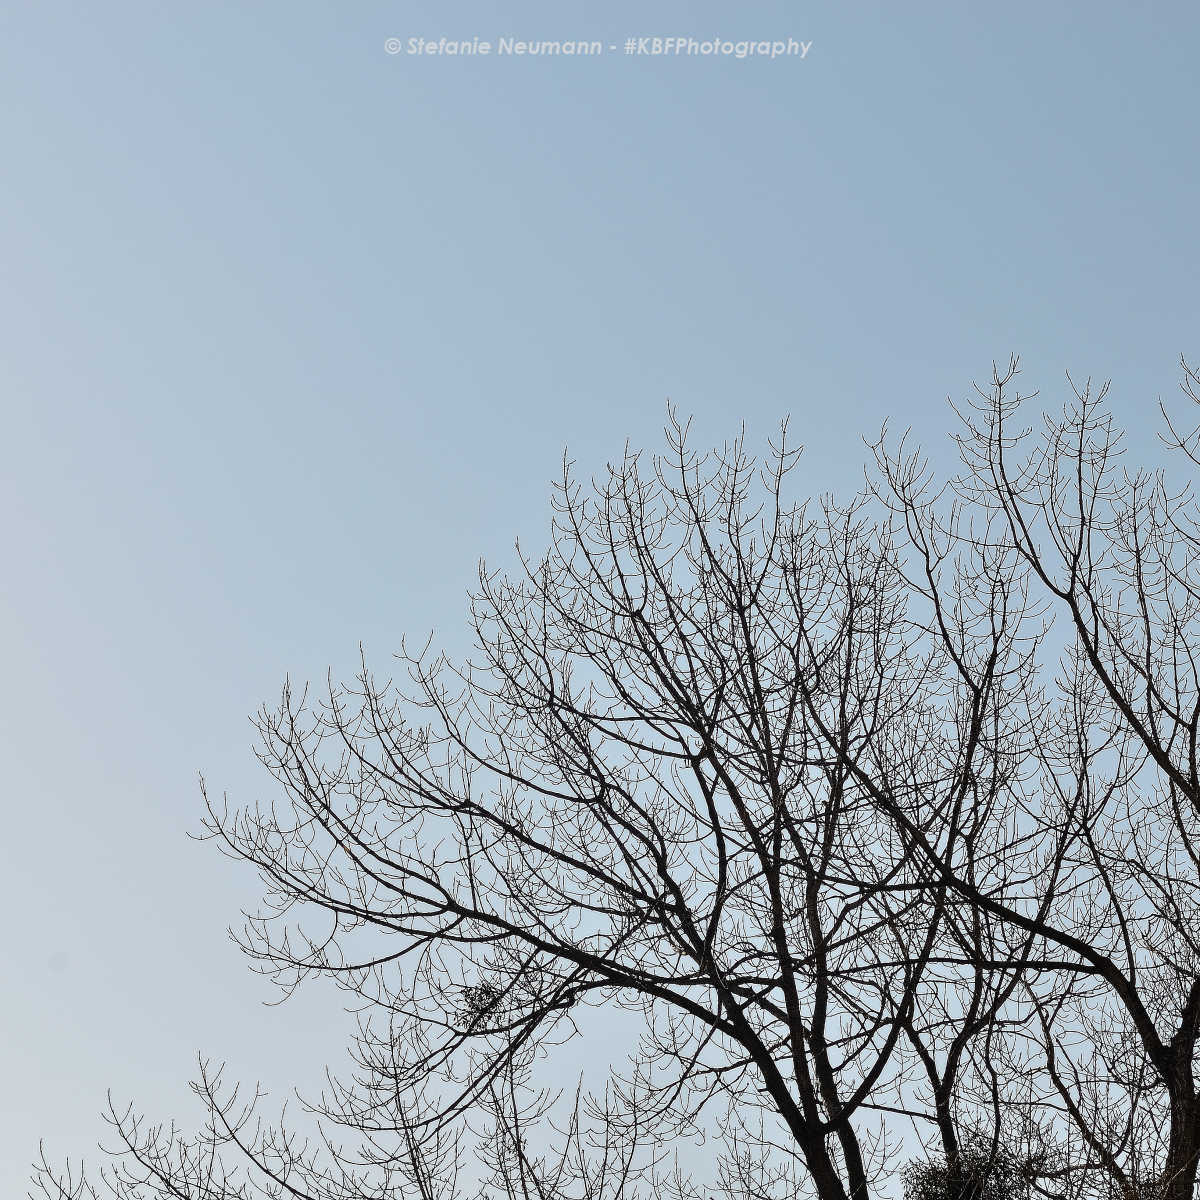 KBFB_2022-04-26-10 © Stefanie Neumann - #KBFPhotography – All Rights Reserved. Bildbeschreibung – Image Description: Blick auf knospende Espe vor klarem, blauem Himmel. View of budding aspen-tree against a clear blue sky.